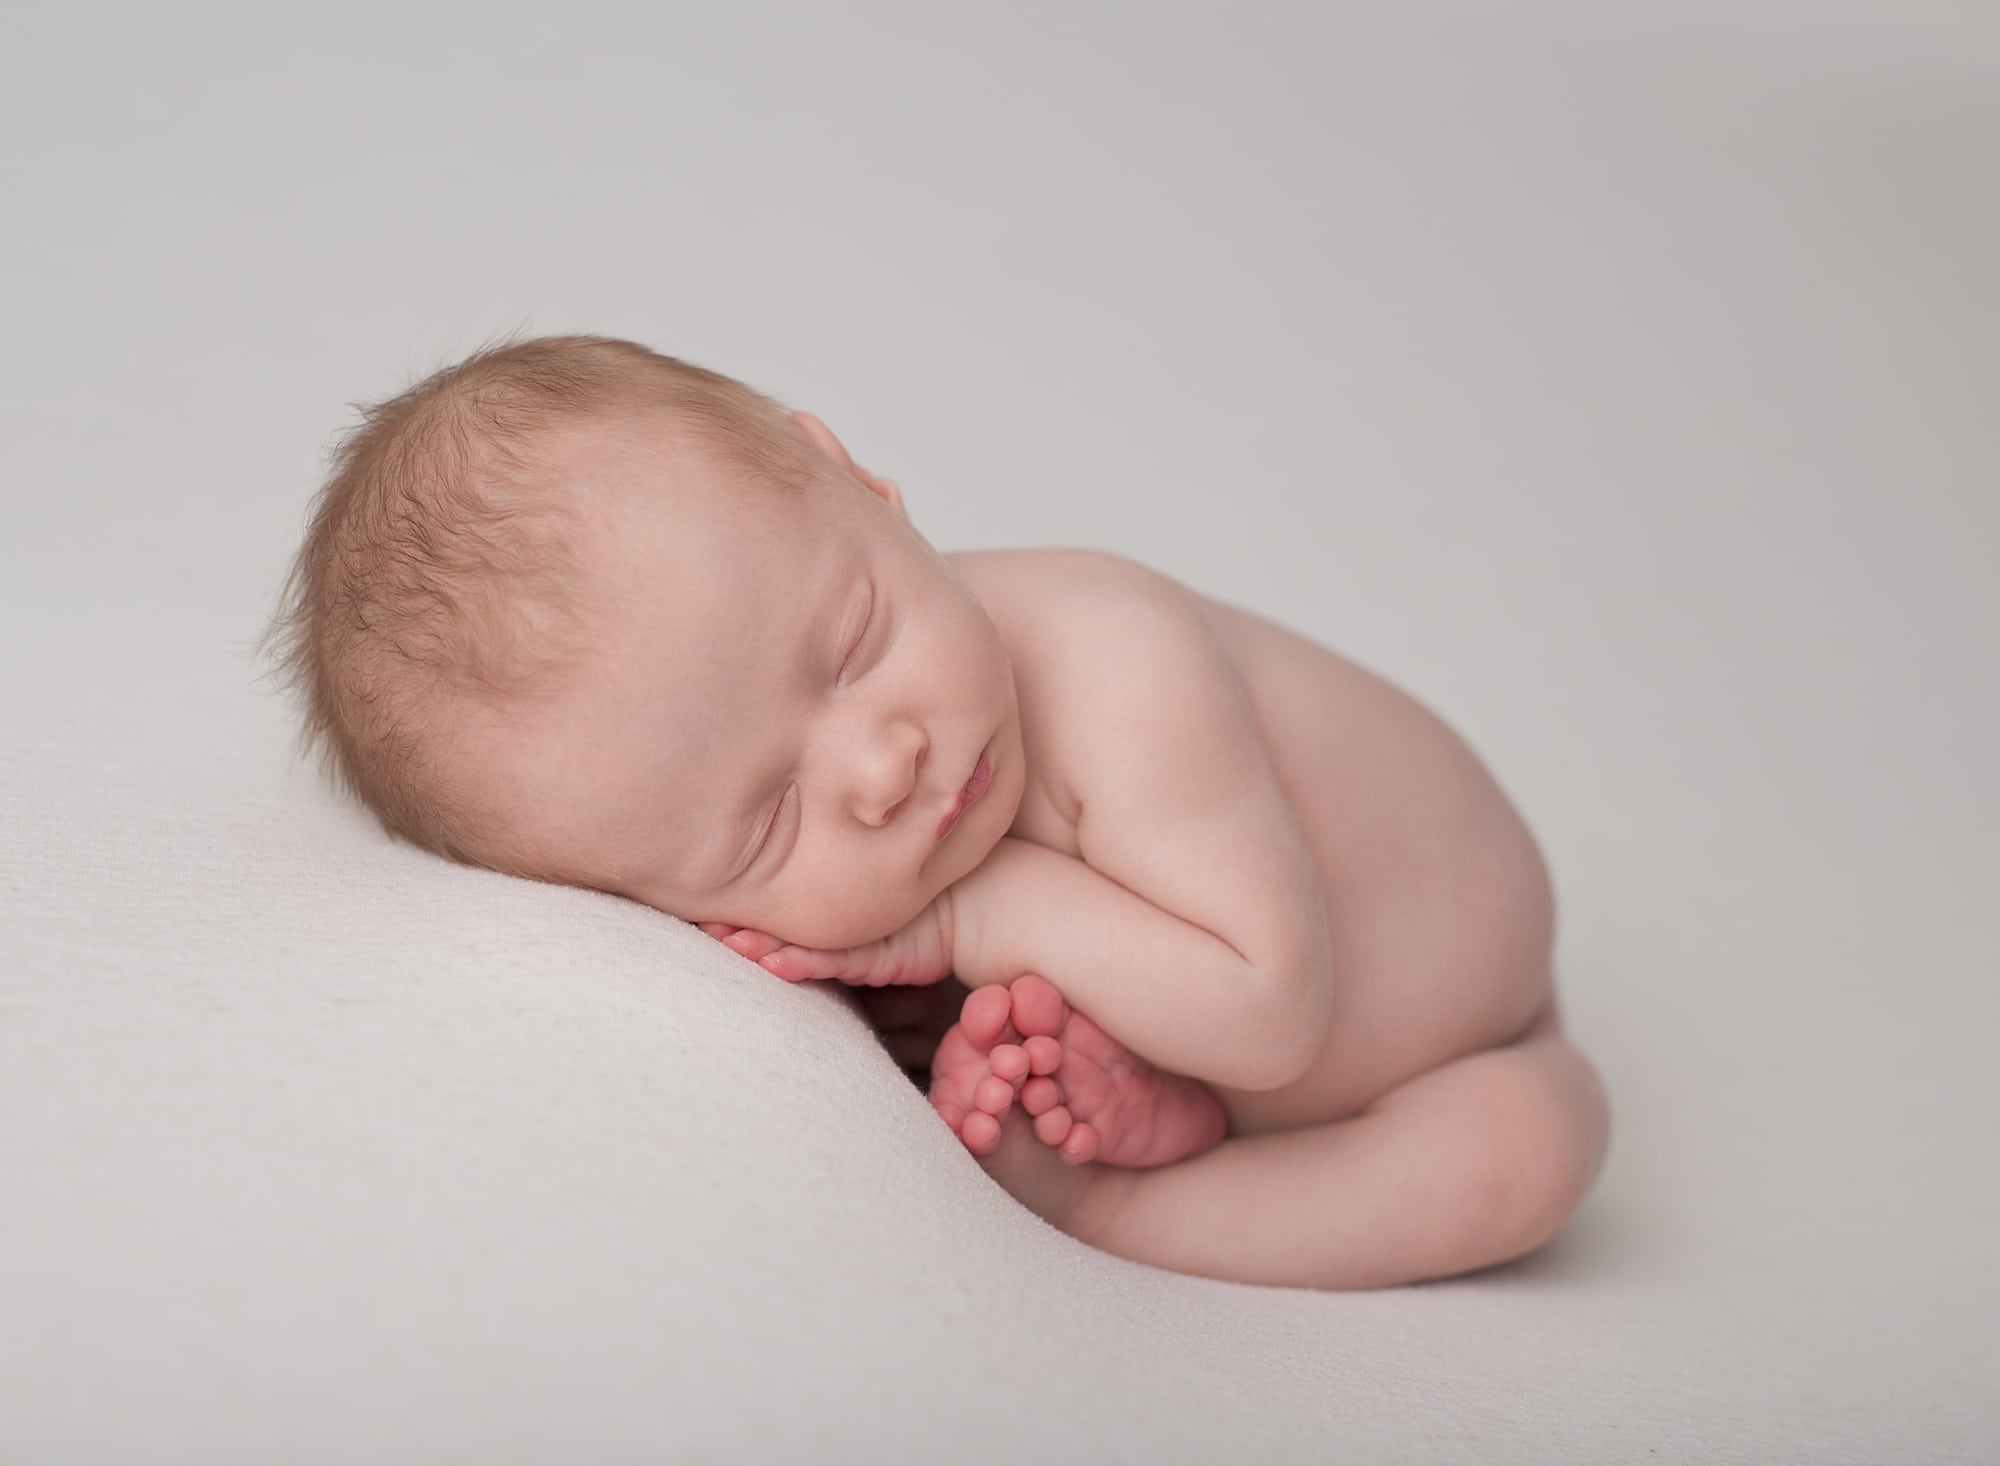 Los Angeles Newborn Baby Photography | Matt Cramer Photography https://www.mattcramerphotography.com